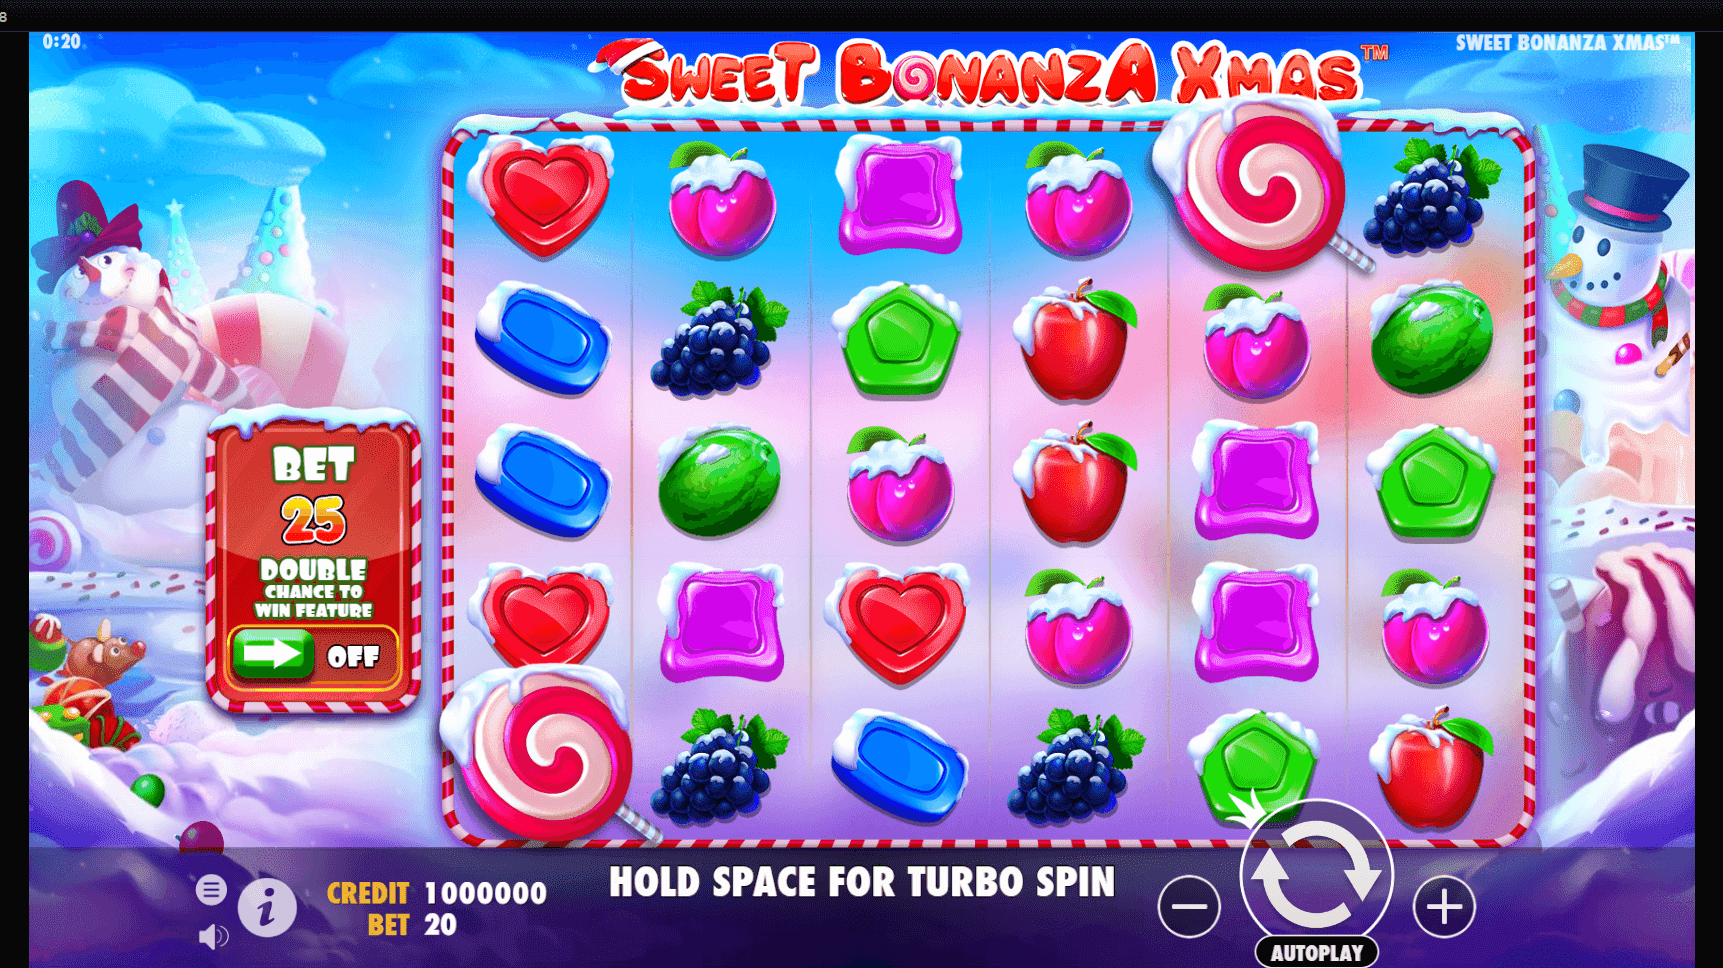 Sweet Bonanza Xmas slot play free